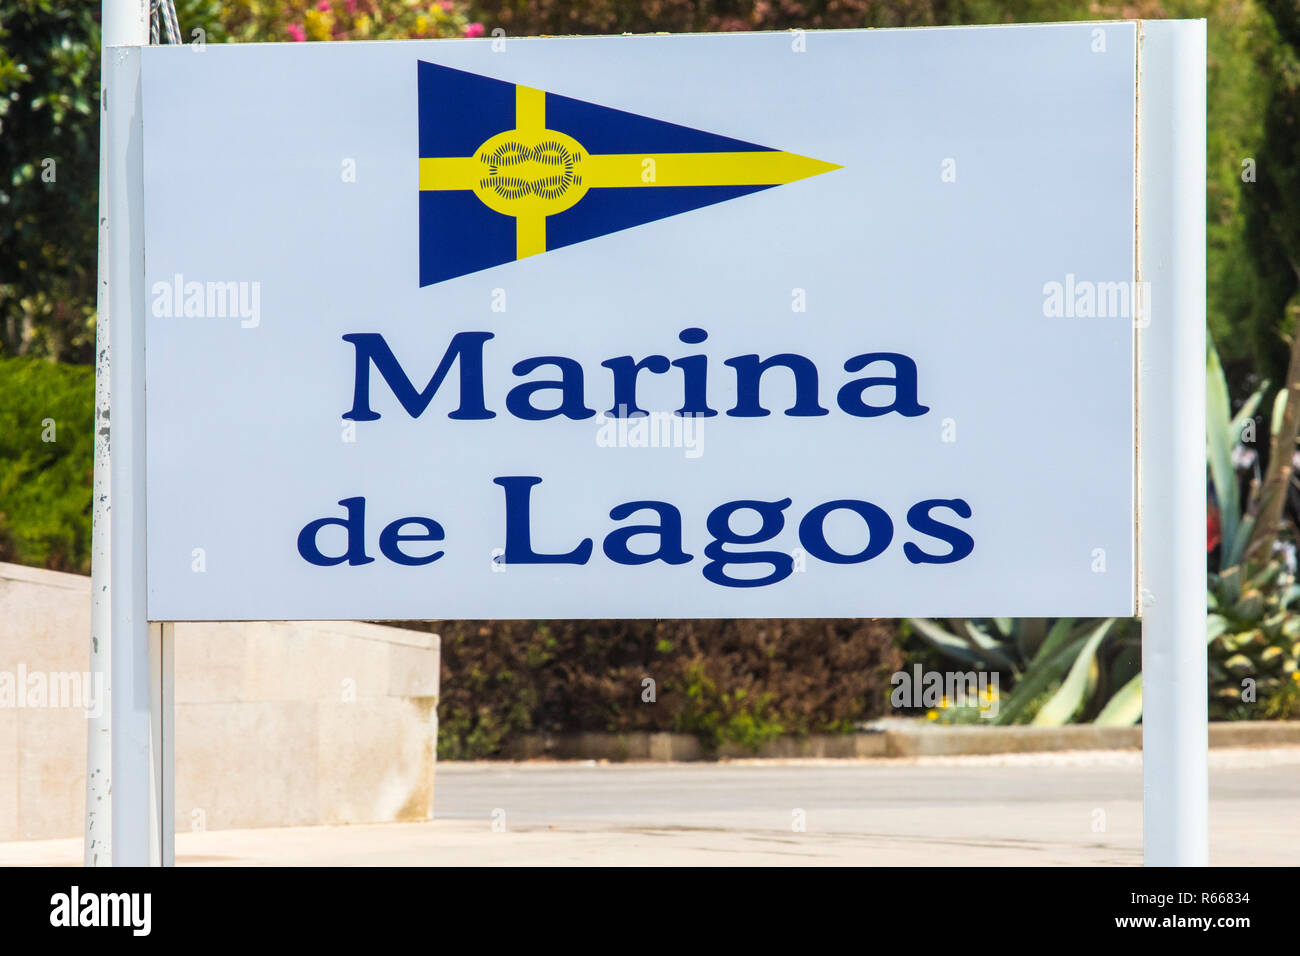 A sign for Marina de Lagos in the Algarve region of Portugal. Stock Photo